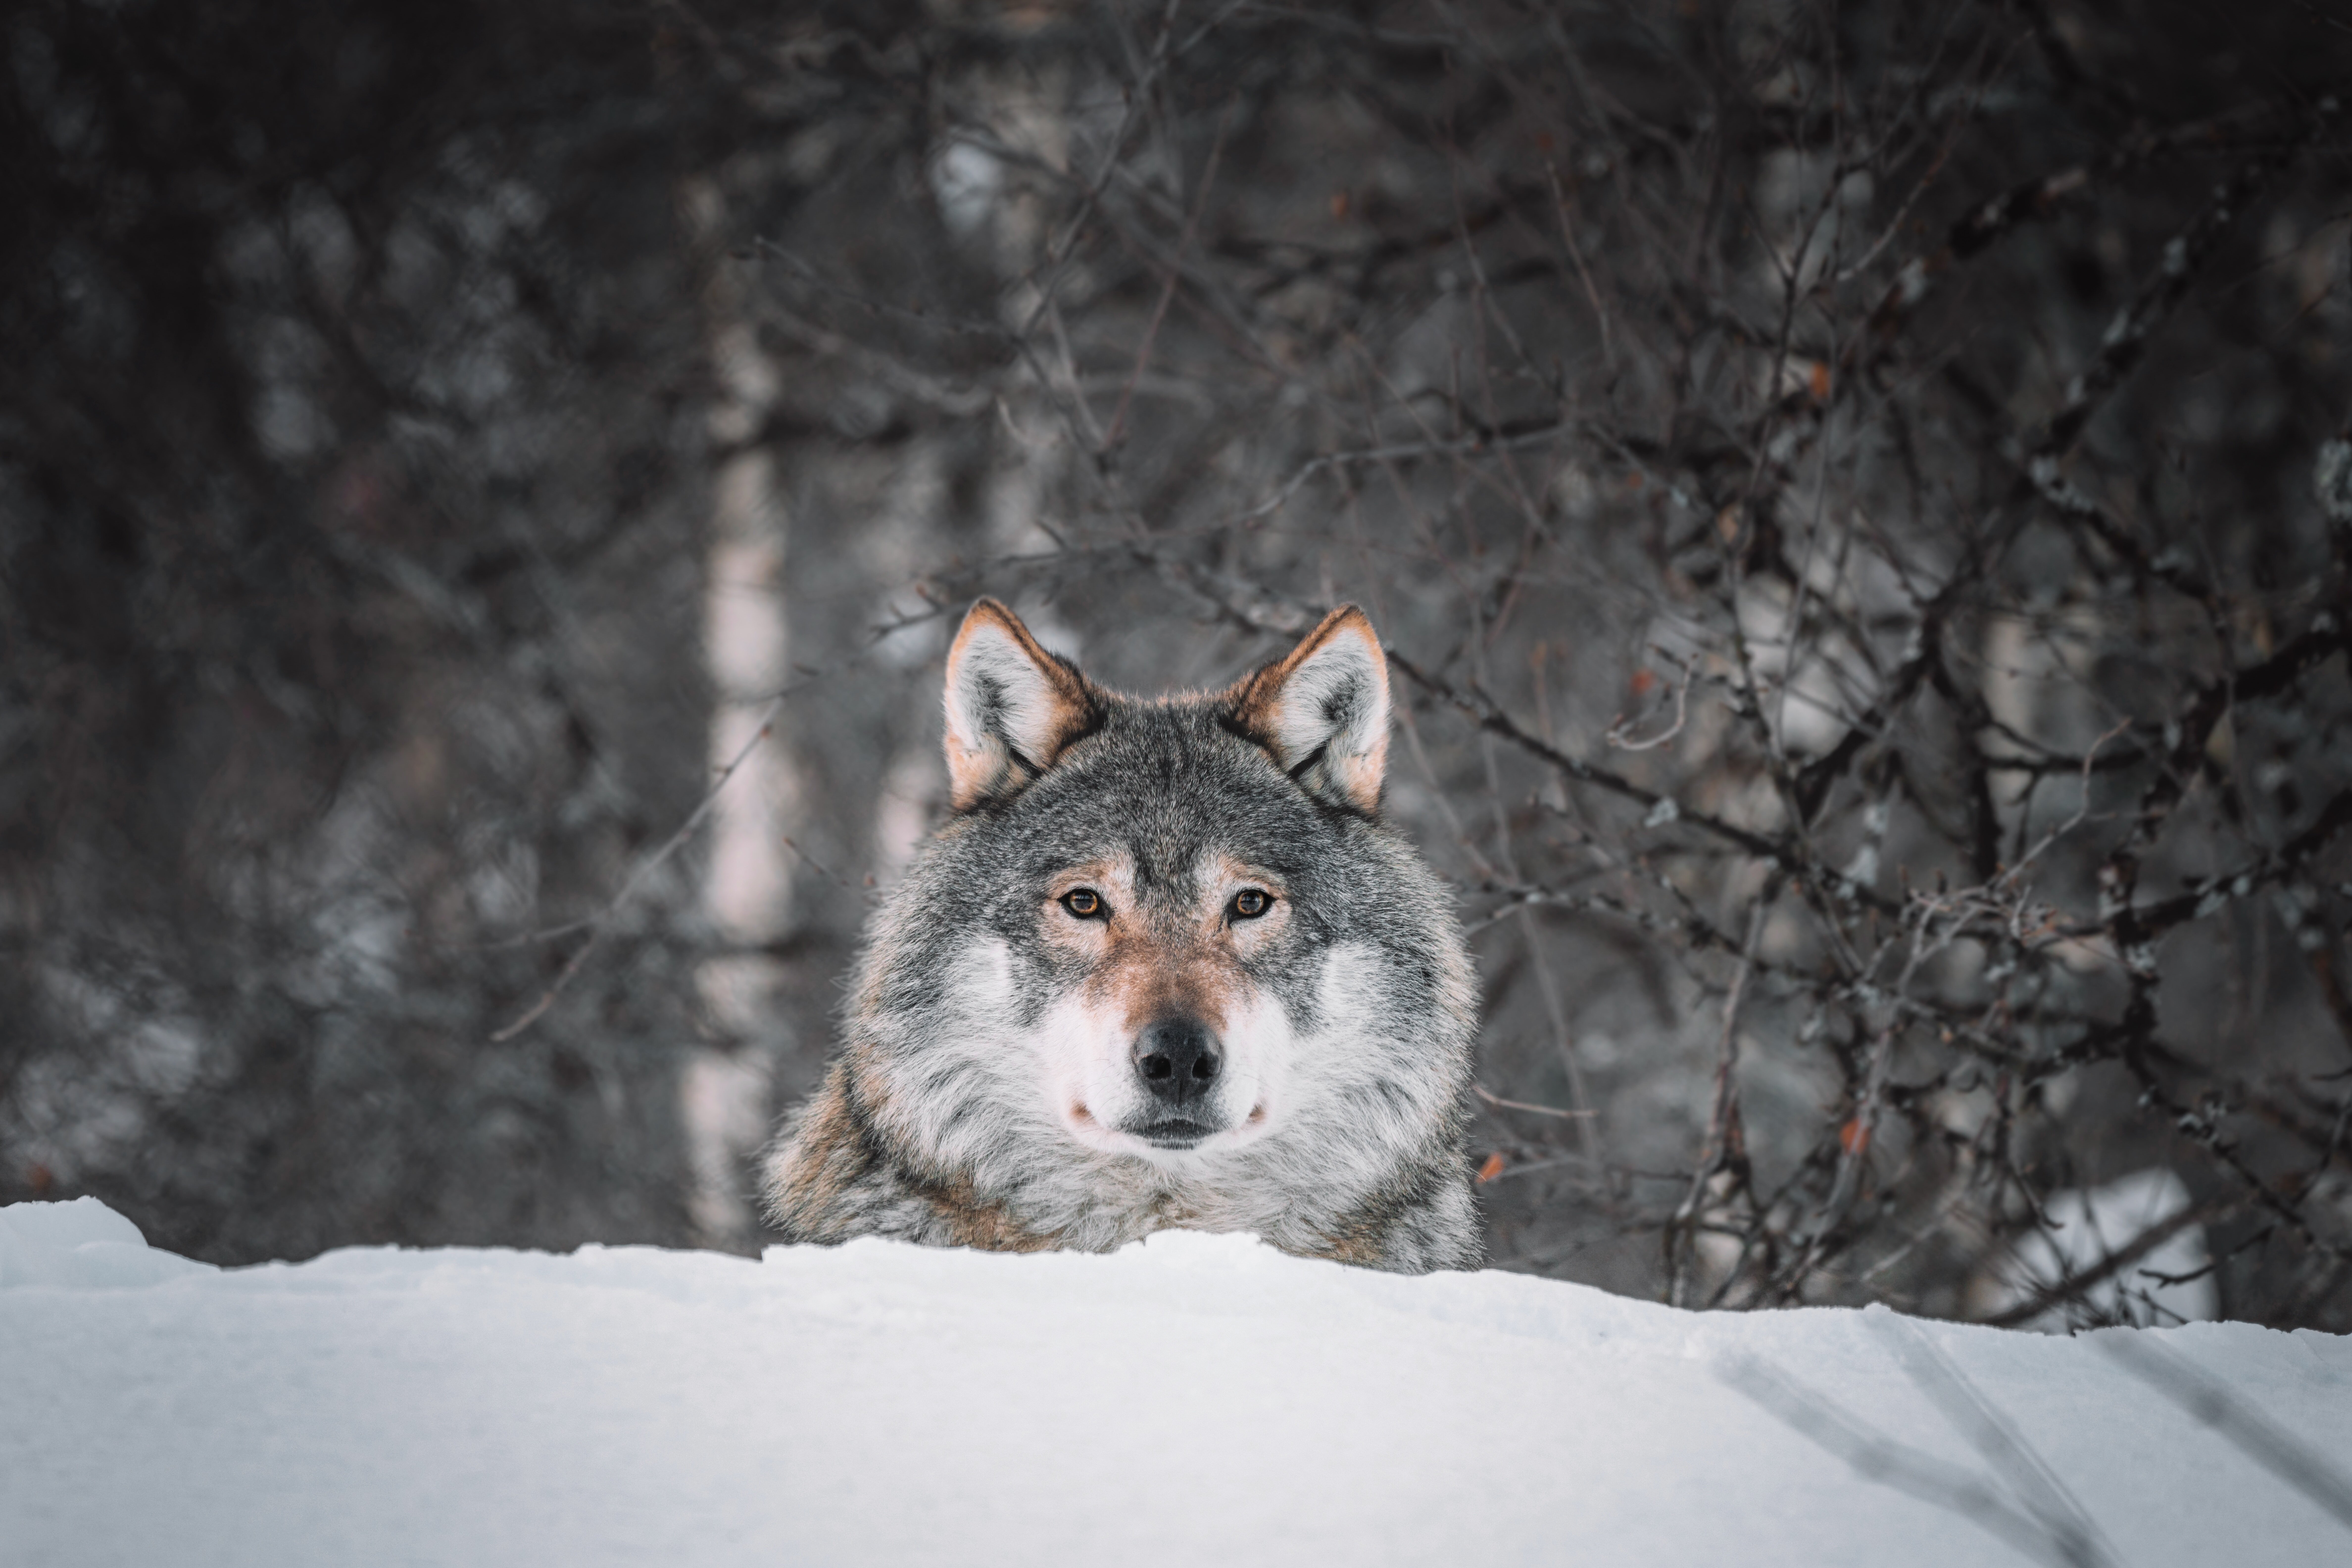 wolf in snow hiding